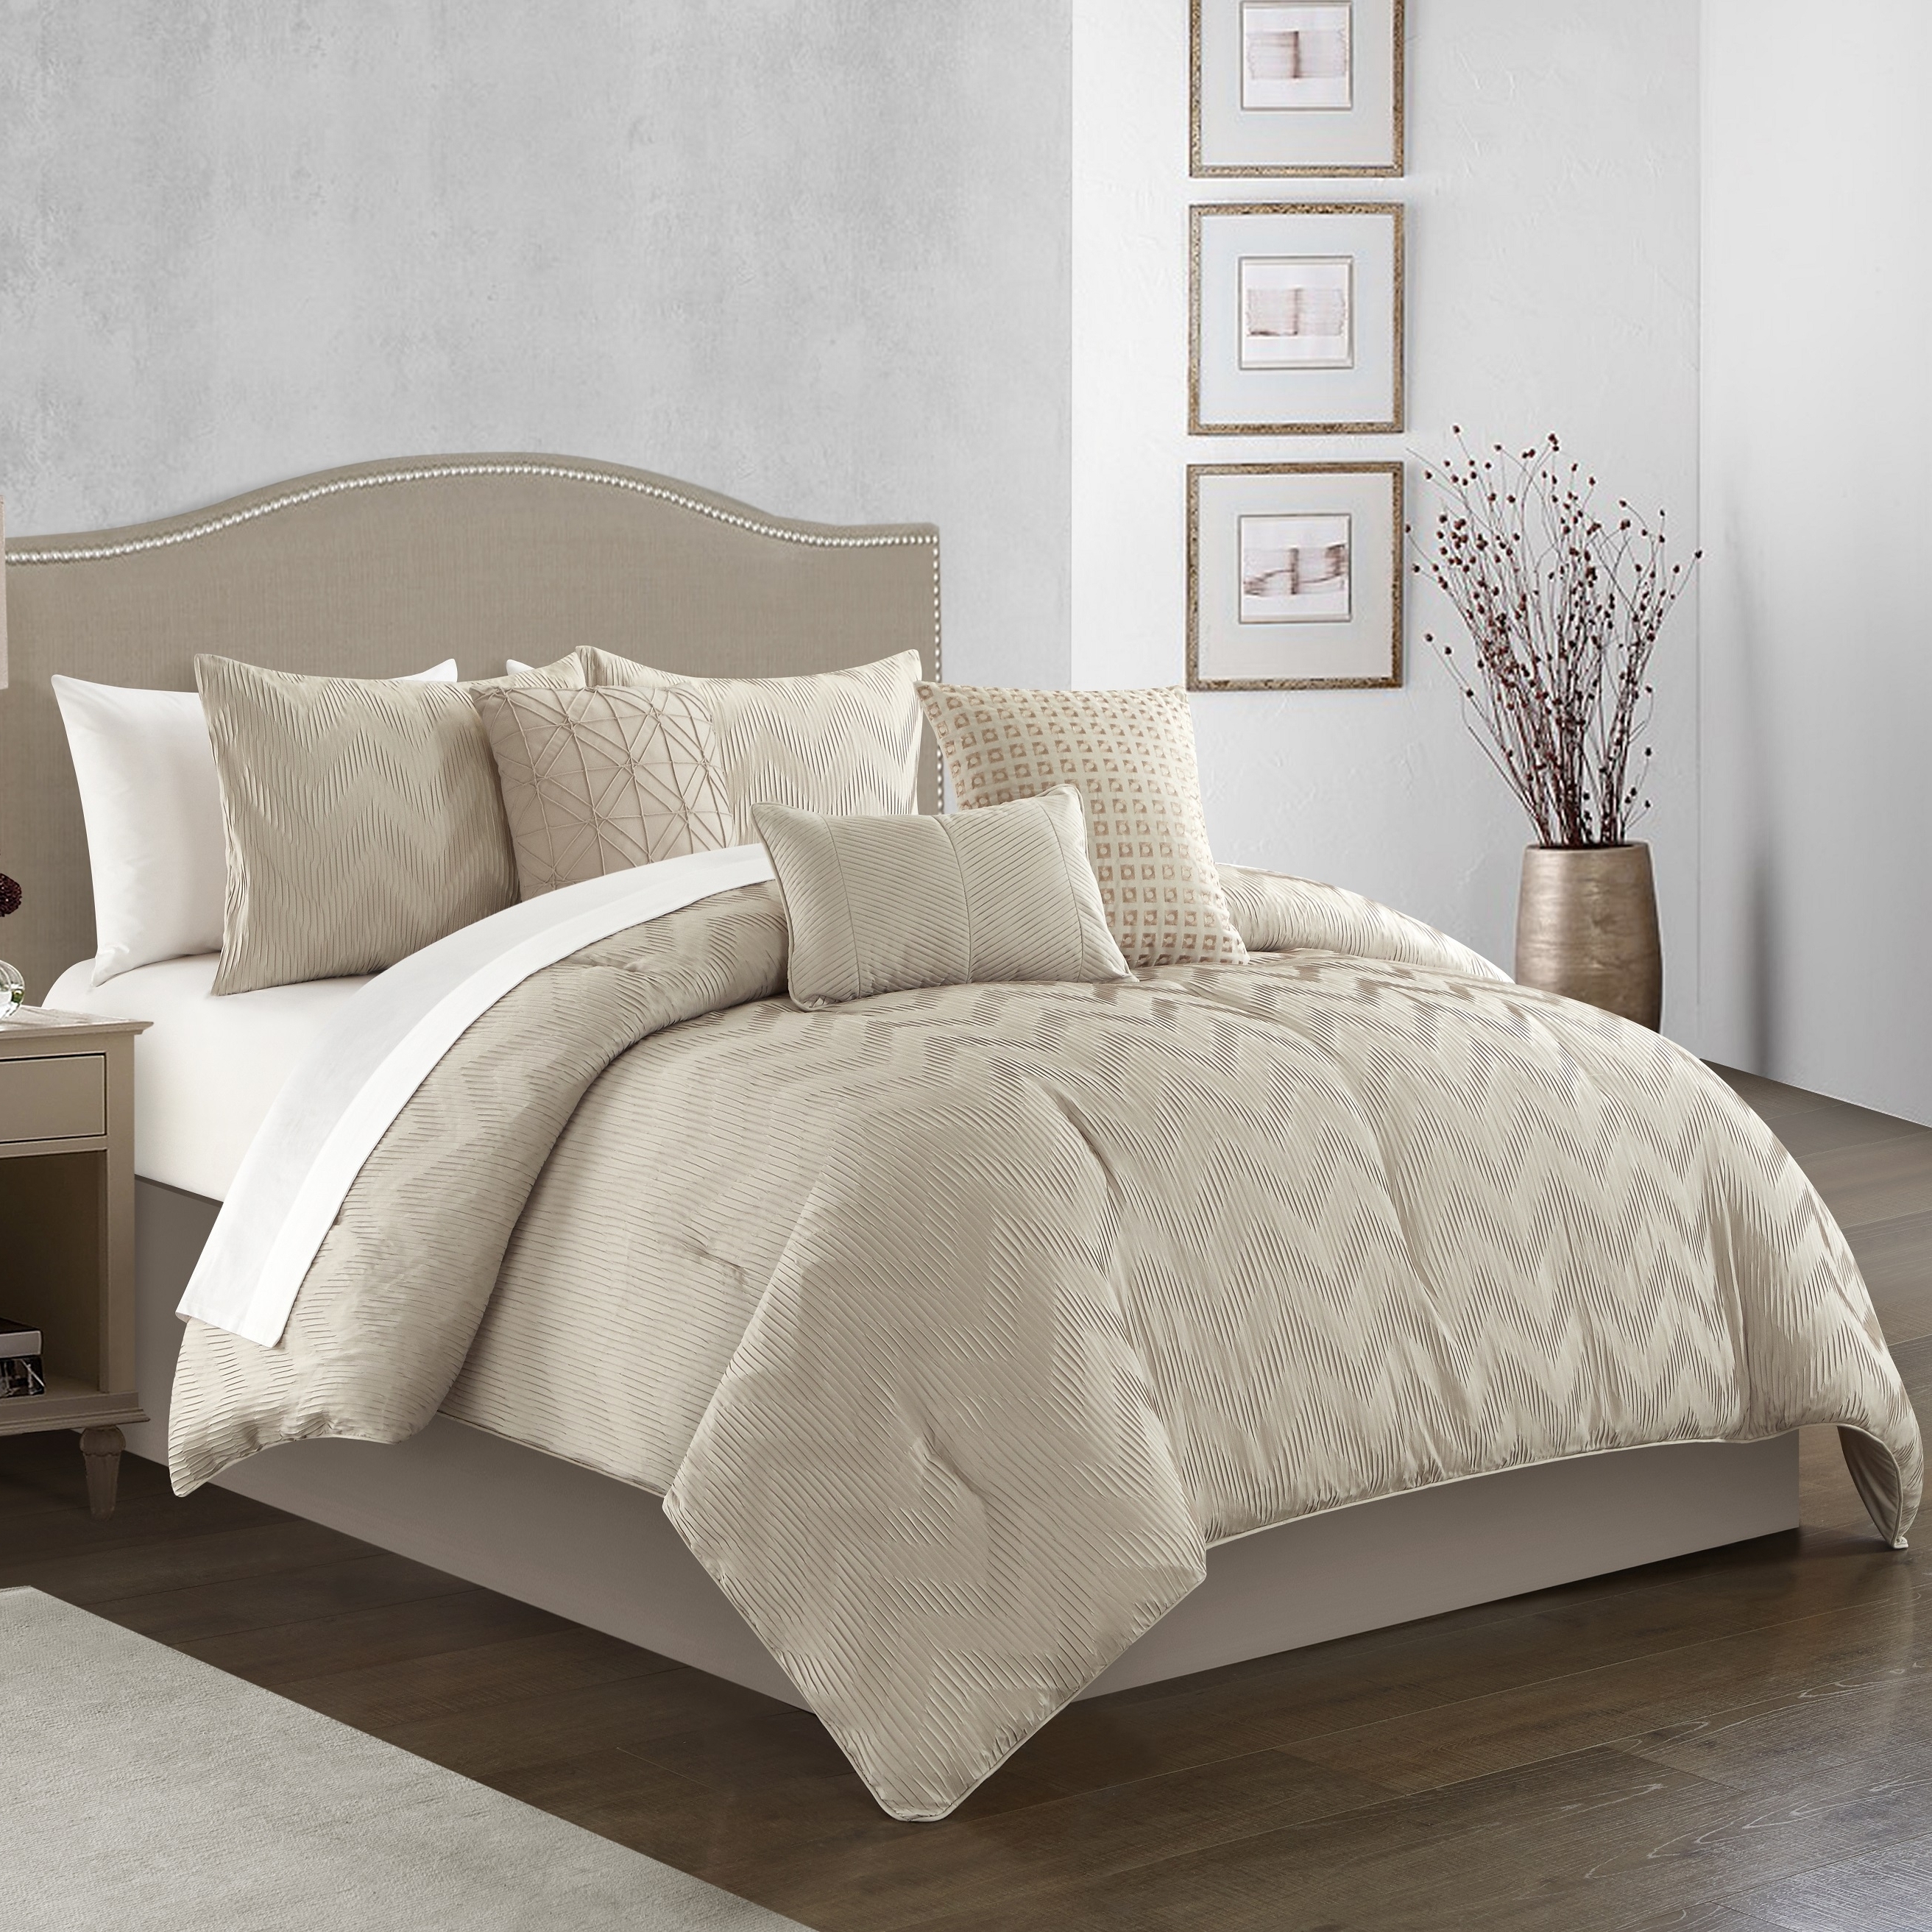 Natalia 6 Piece Comforter Set Plush Ribbed Chevron Design Bedding - Decorative Pillows Shams Included - Beige, King